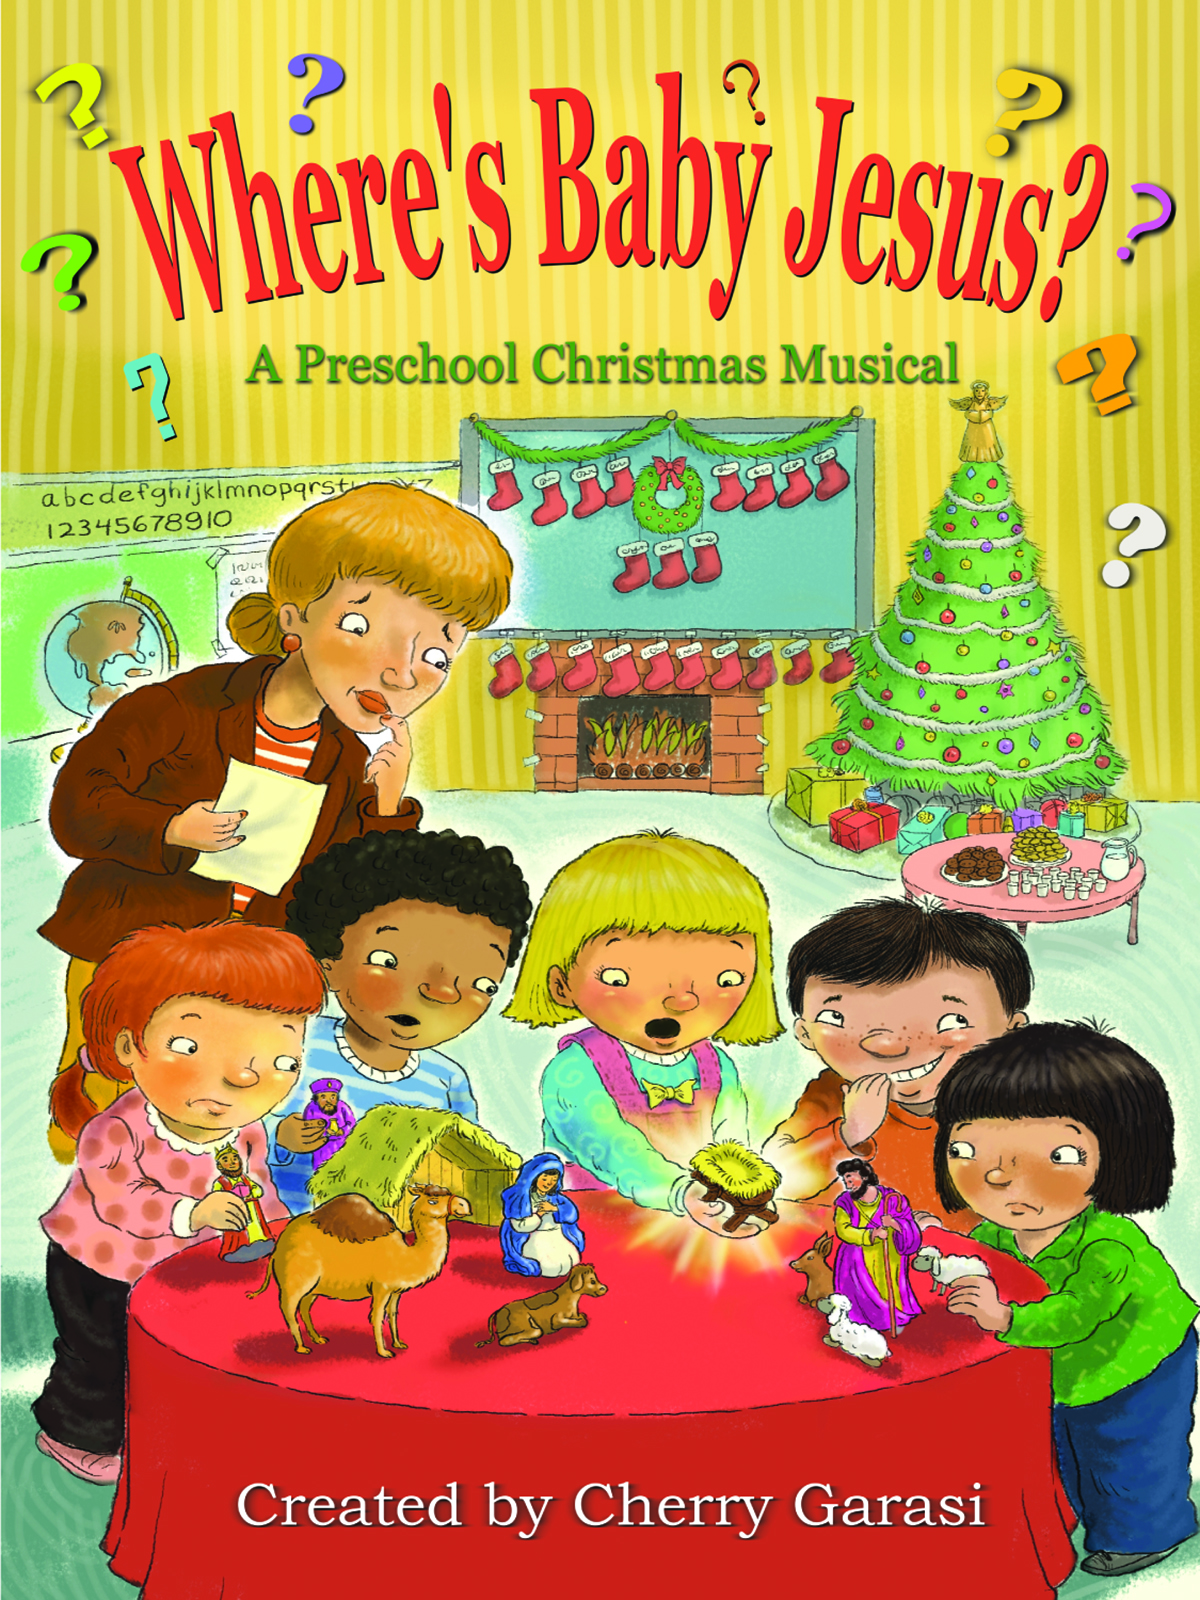 Where's Baby Jesus?